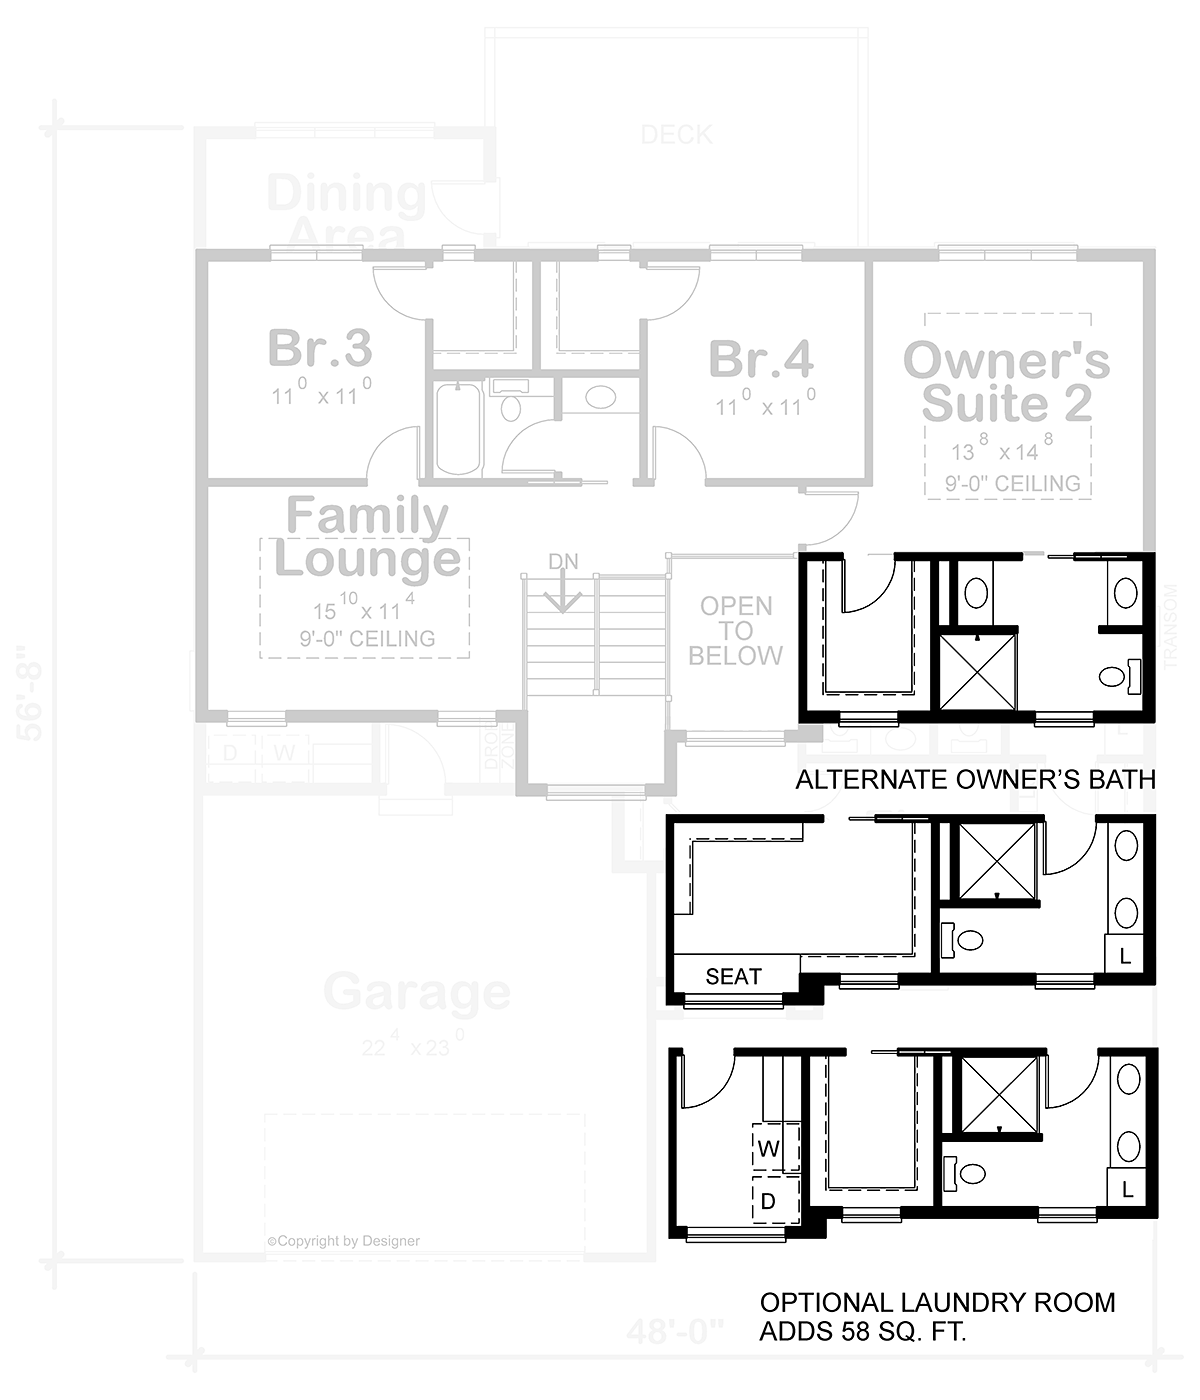 House Plan 81455 Alternate Level Two